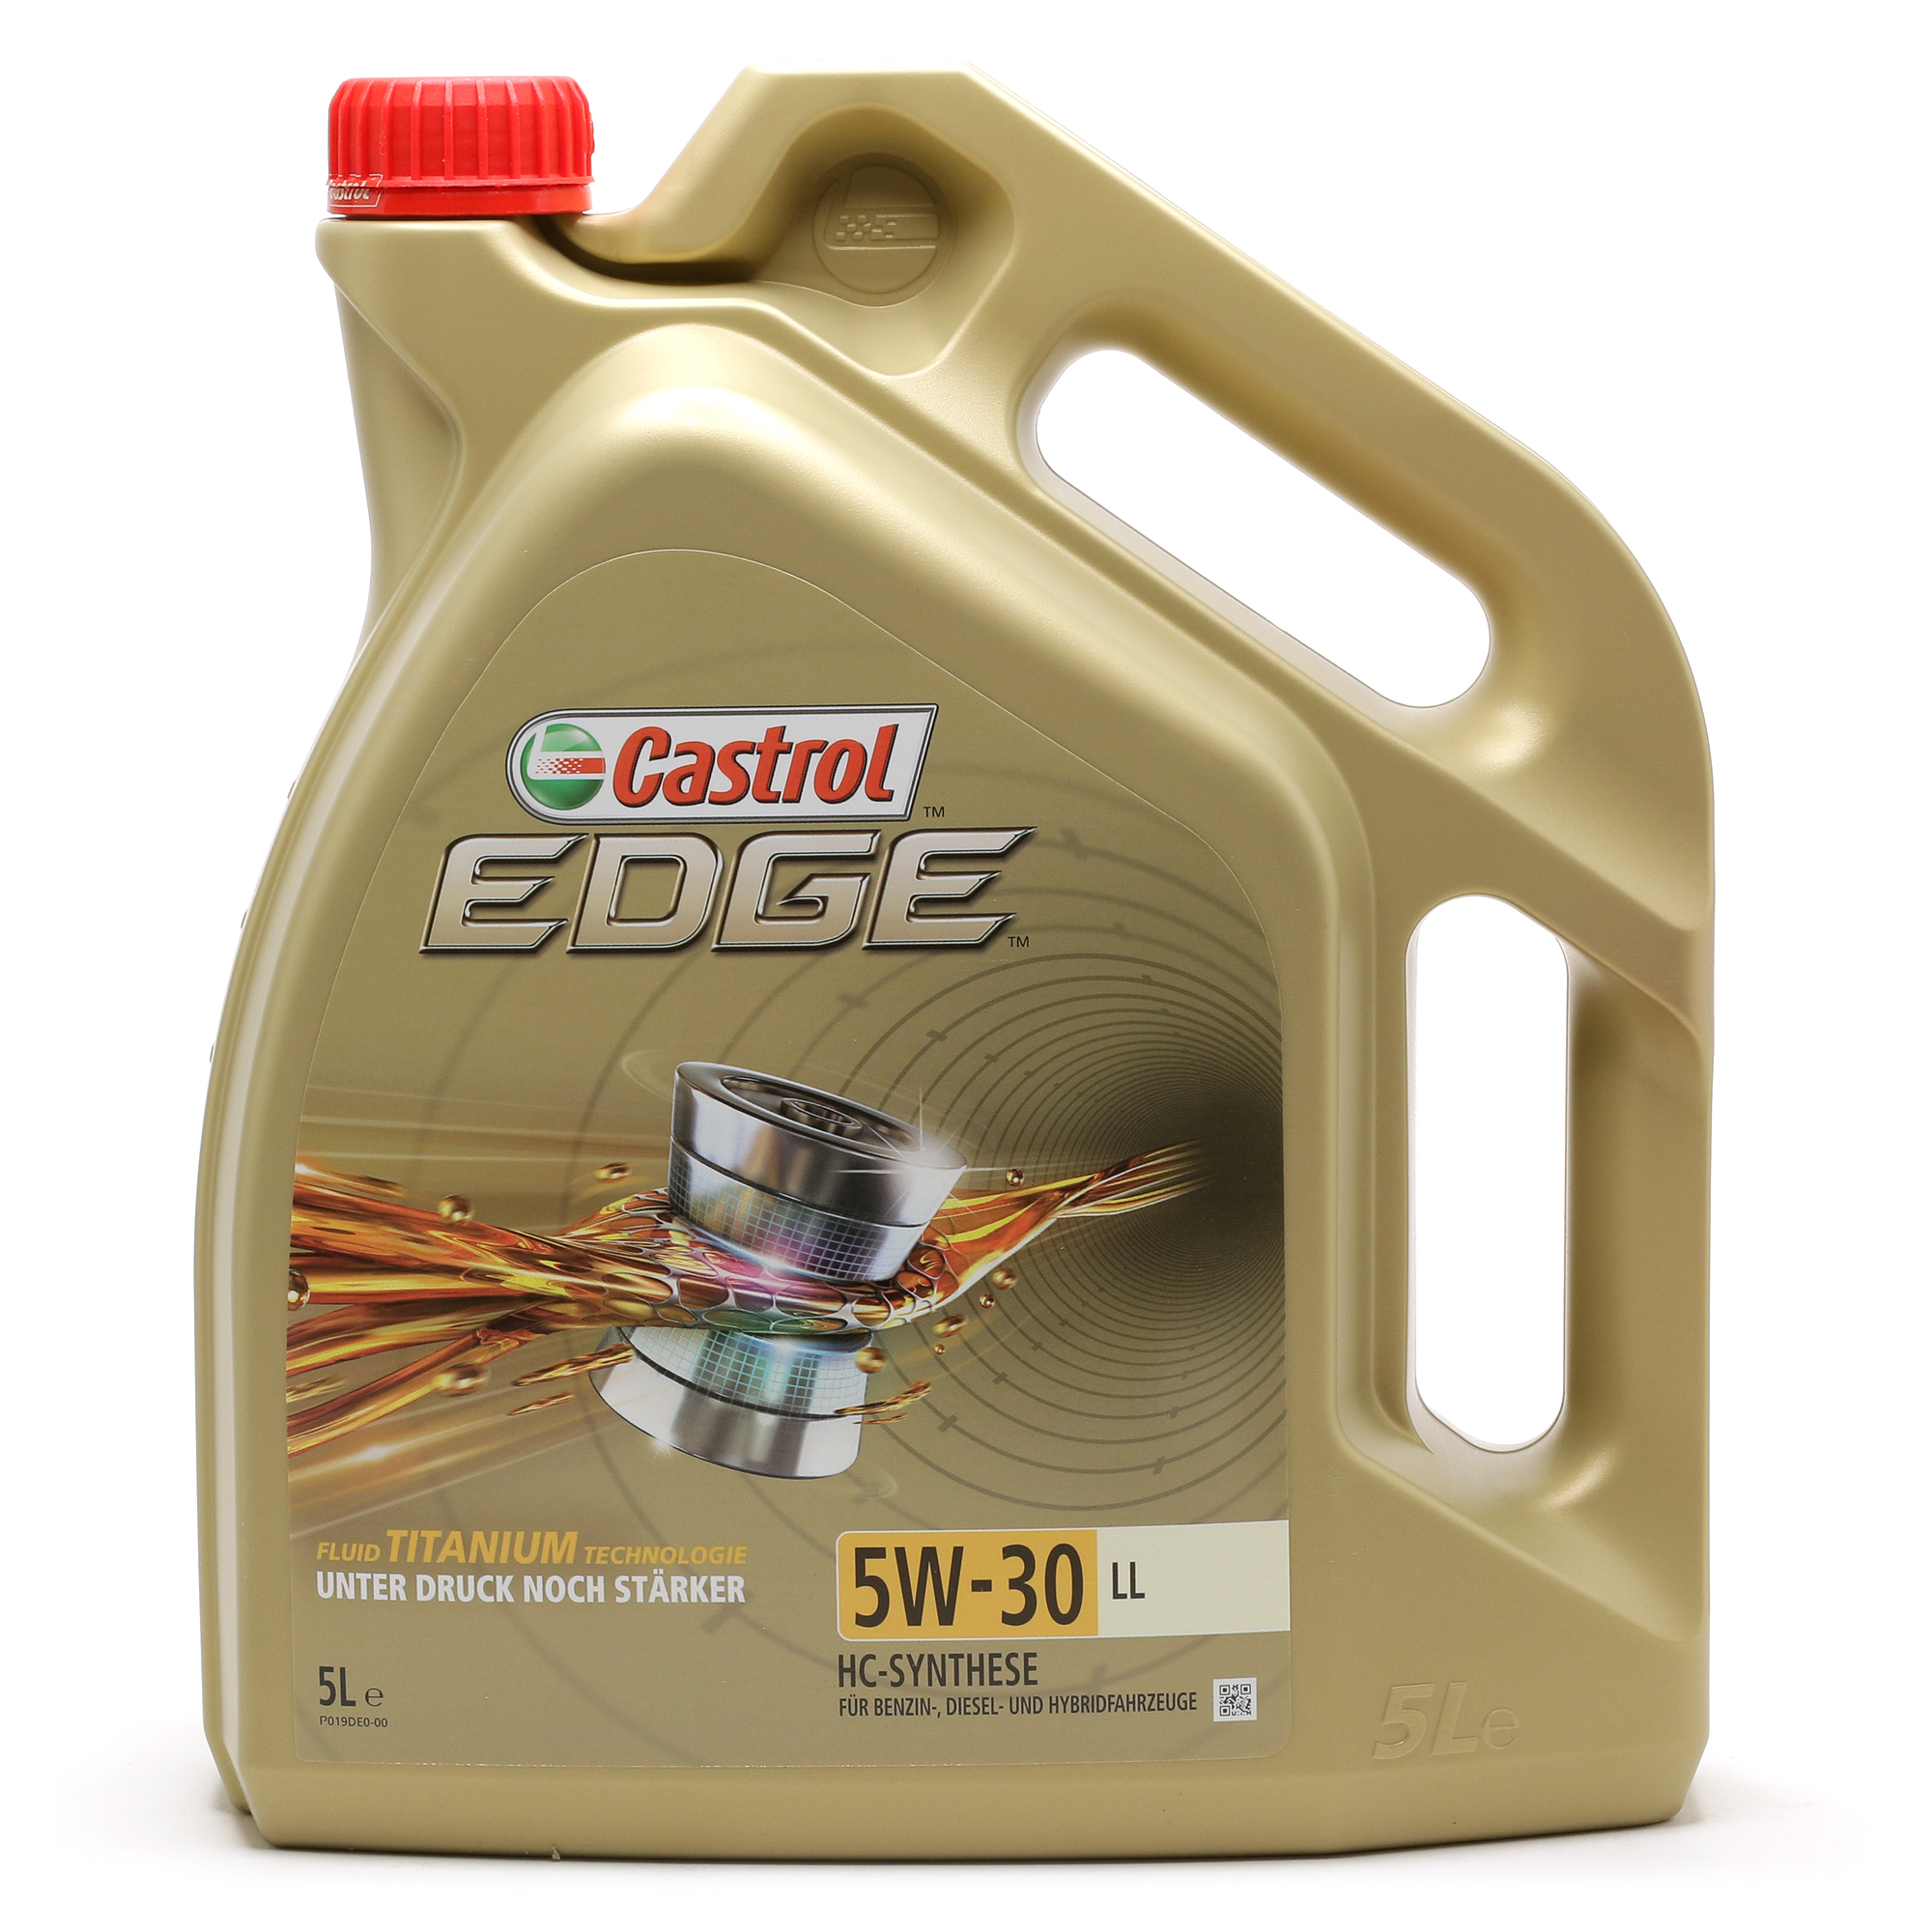 Castrol EDGE 5W-30 LL Motoröl 1 Liter